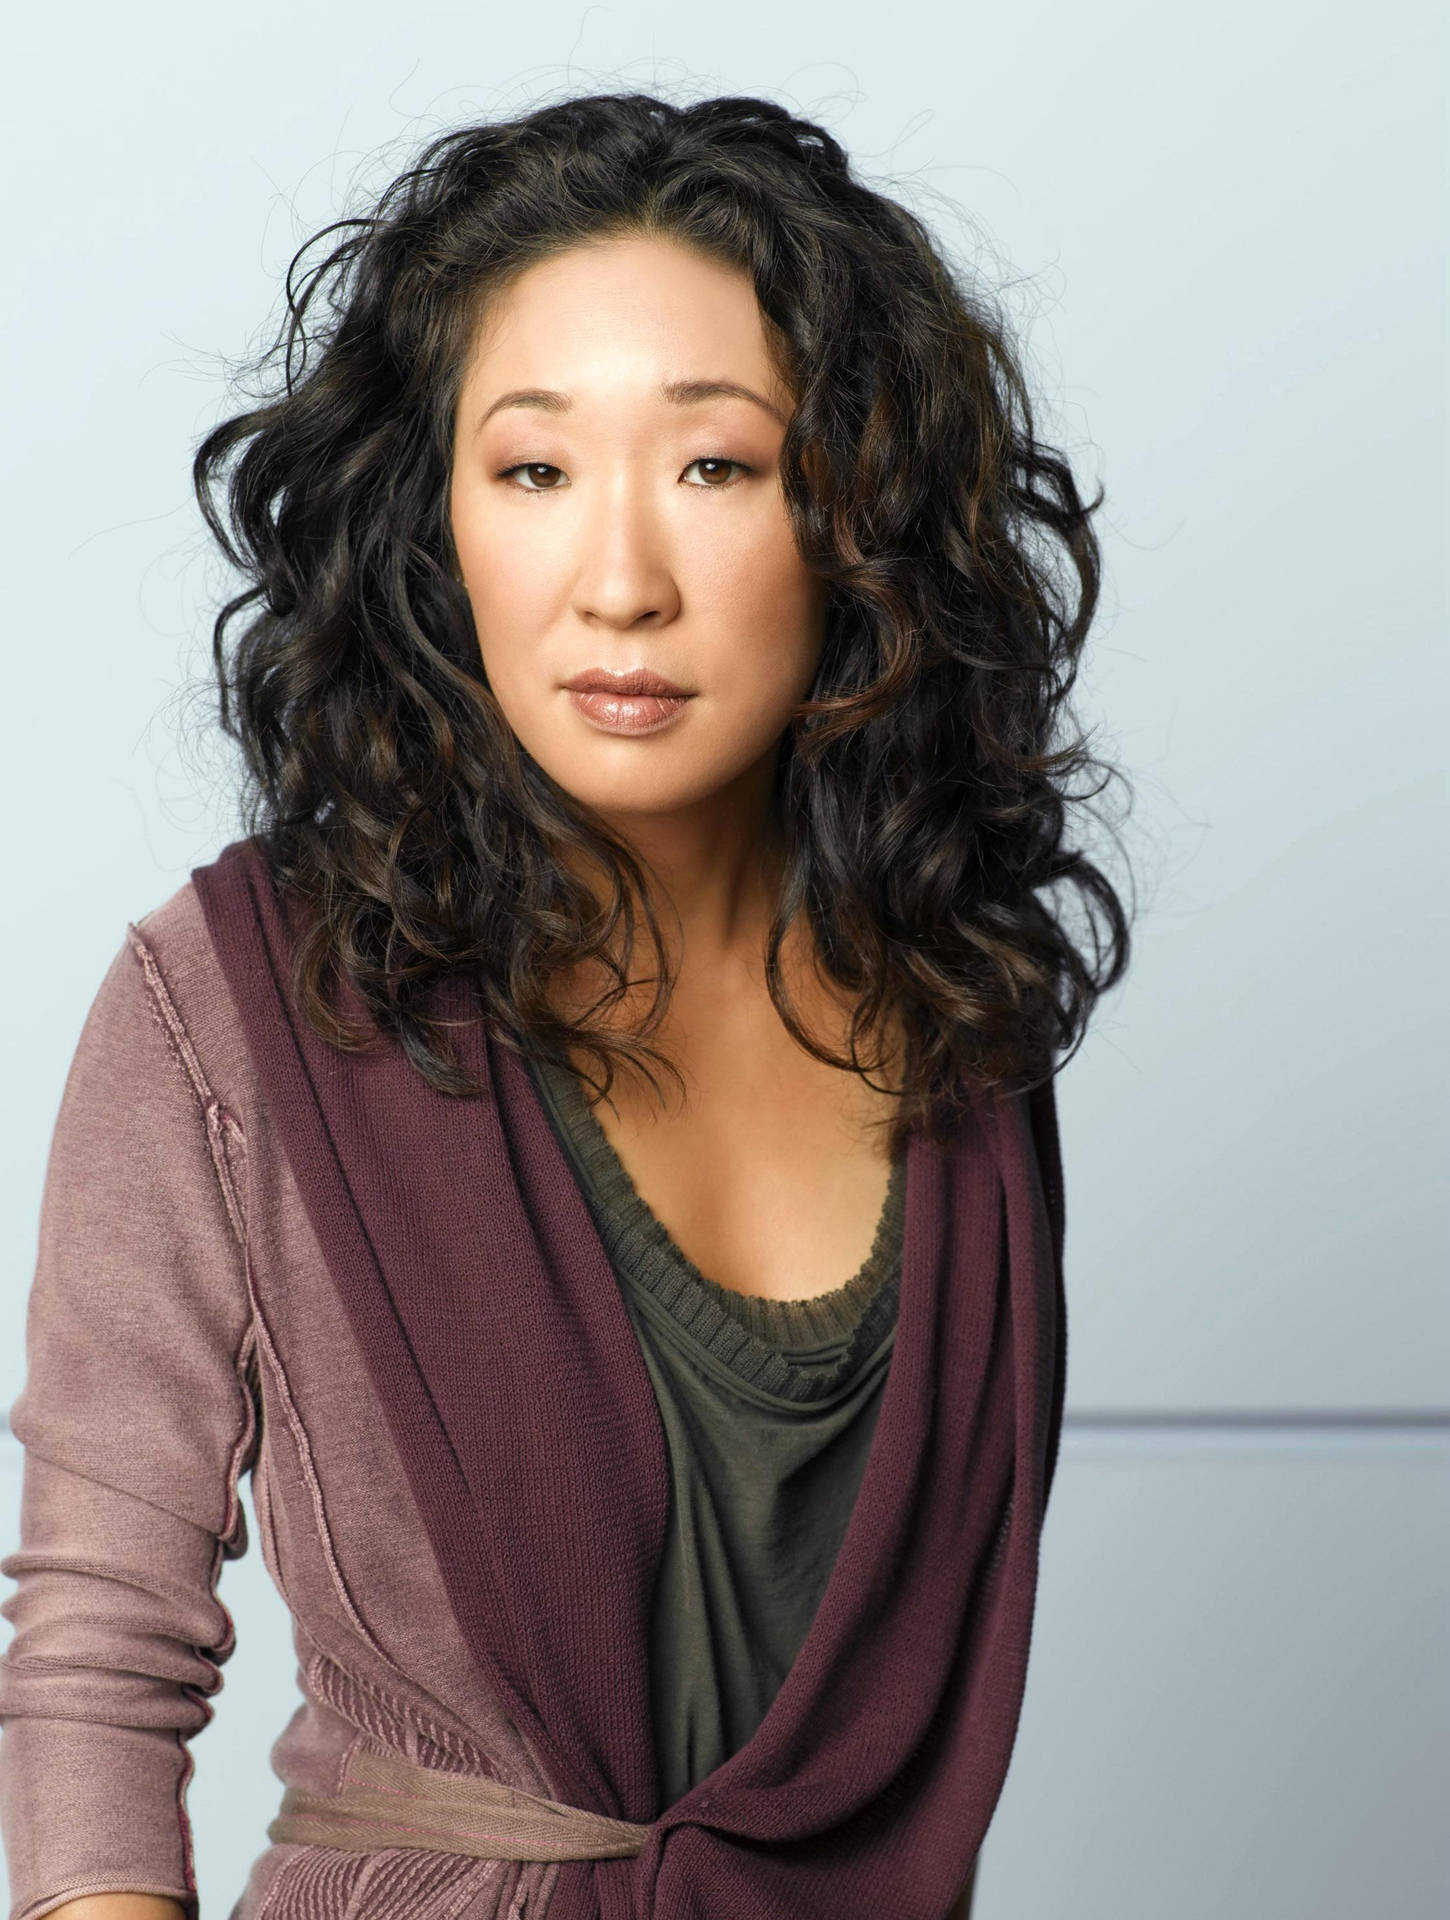 Sandra Oh As Cristina Yang For Grey's Anatomy TV Show Wallpaper